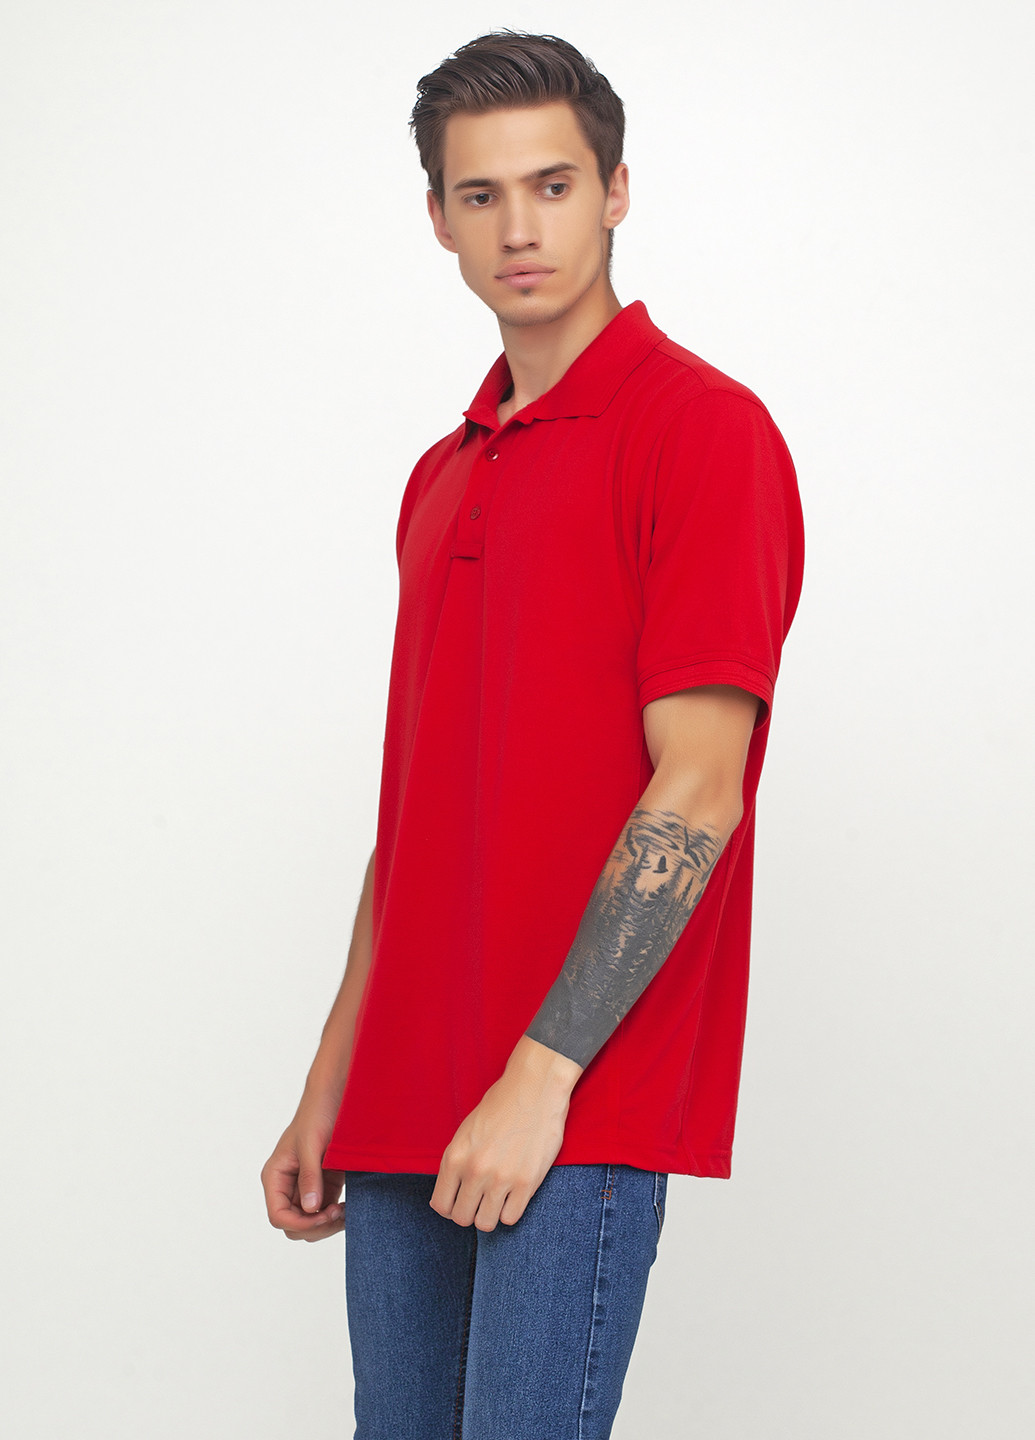 Красная футболка-поло для мужчин Perfection однотонная